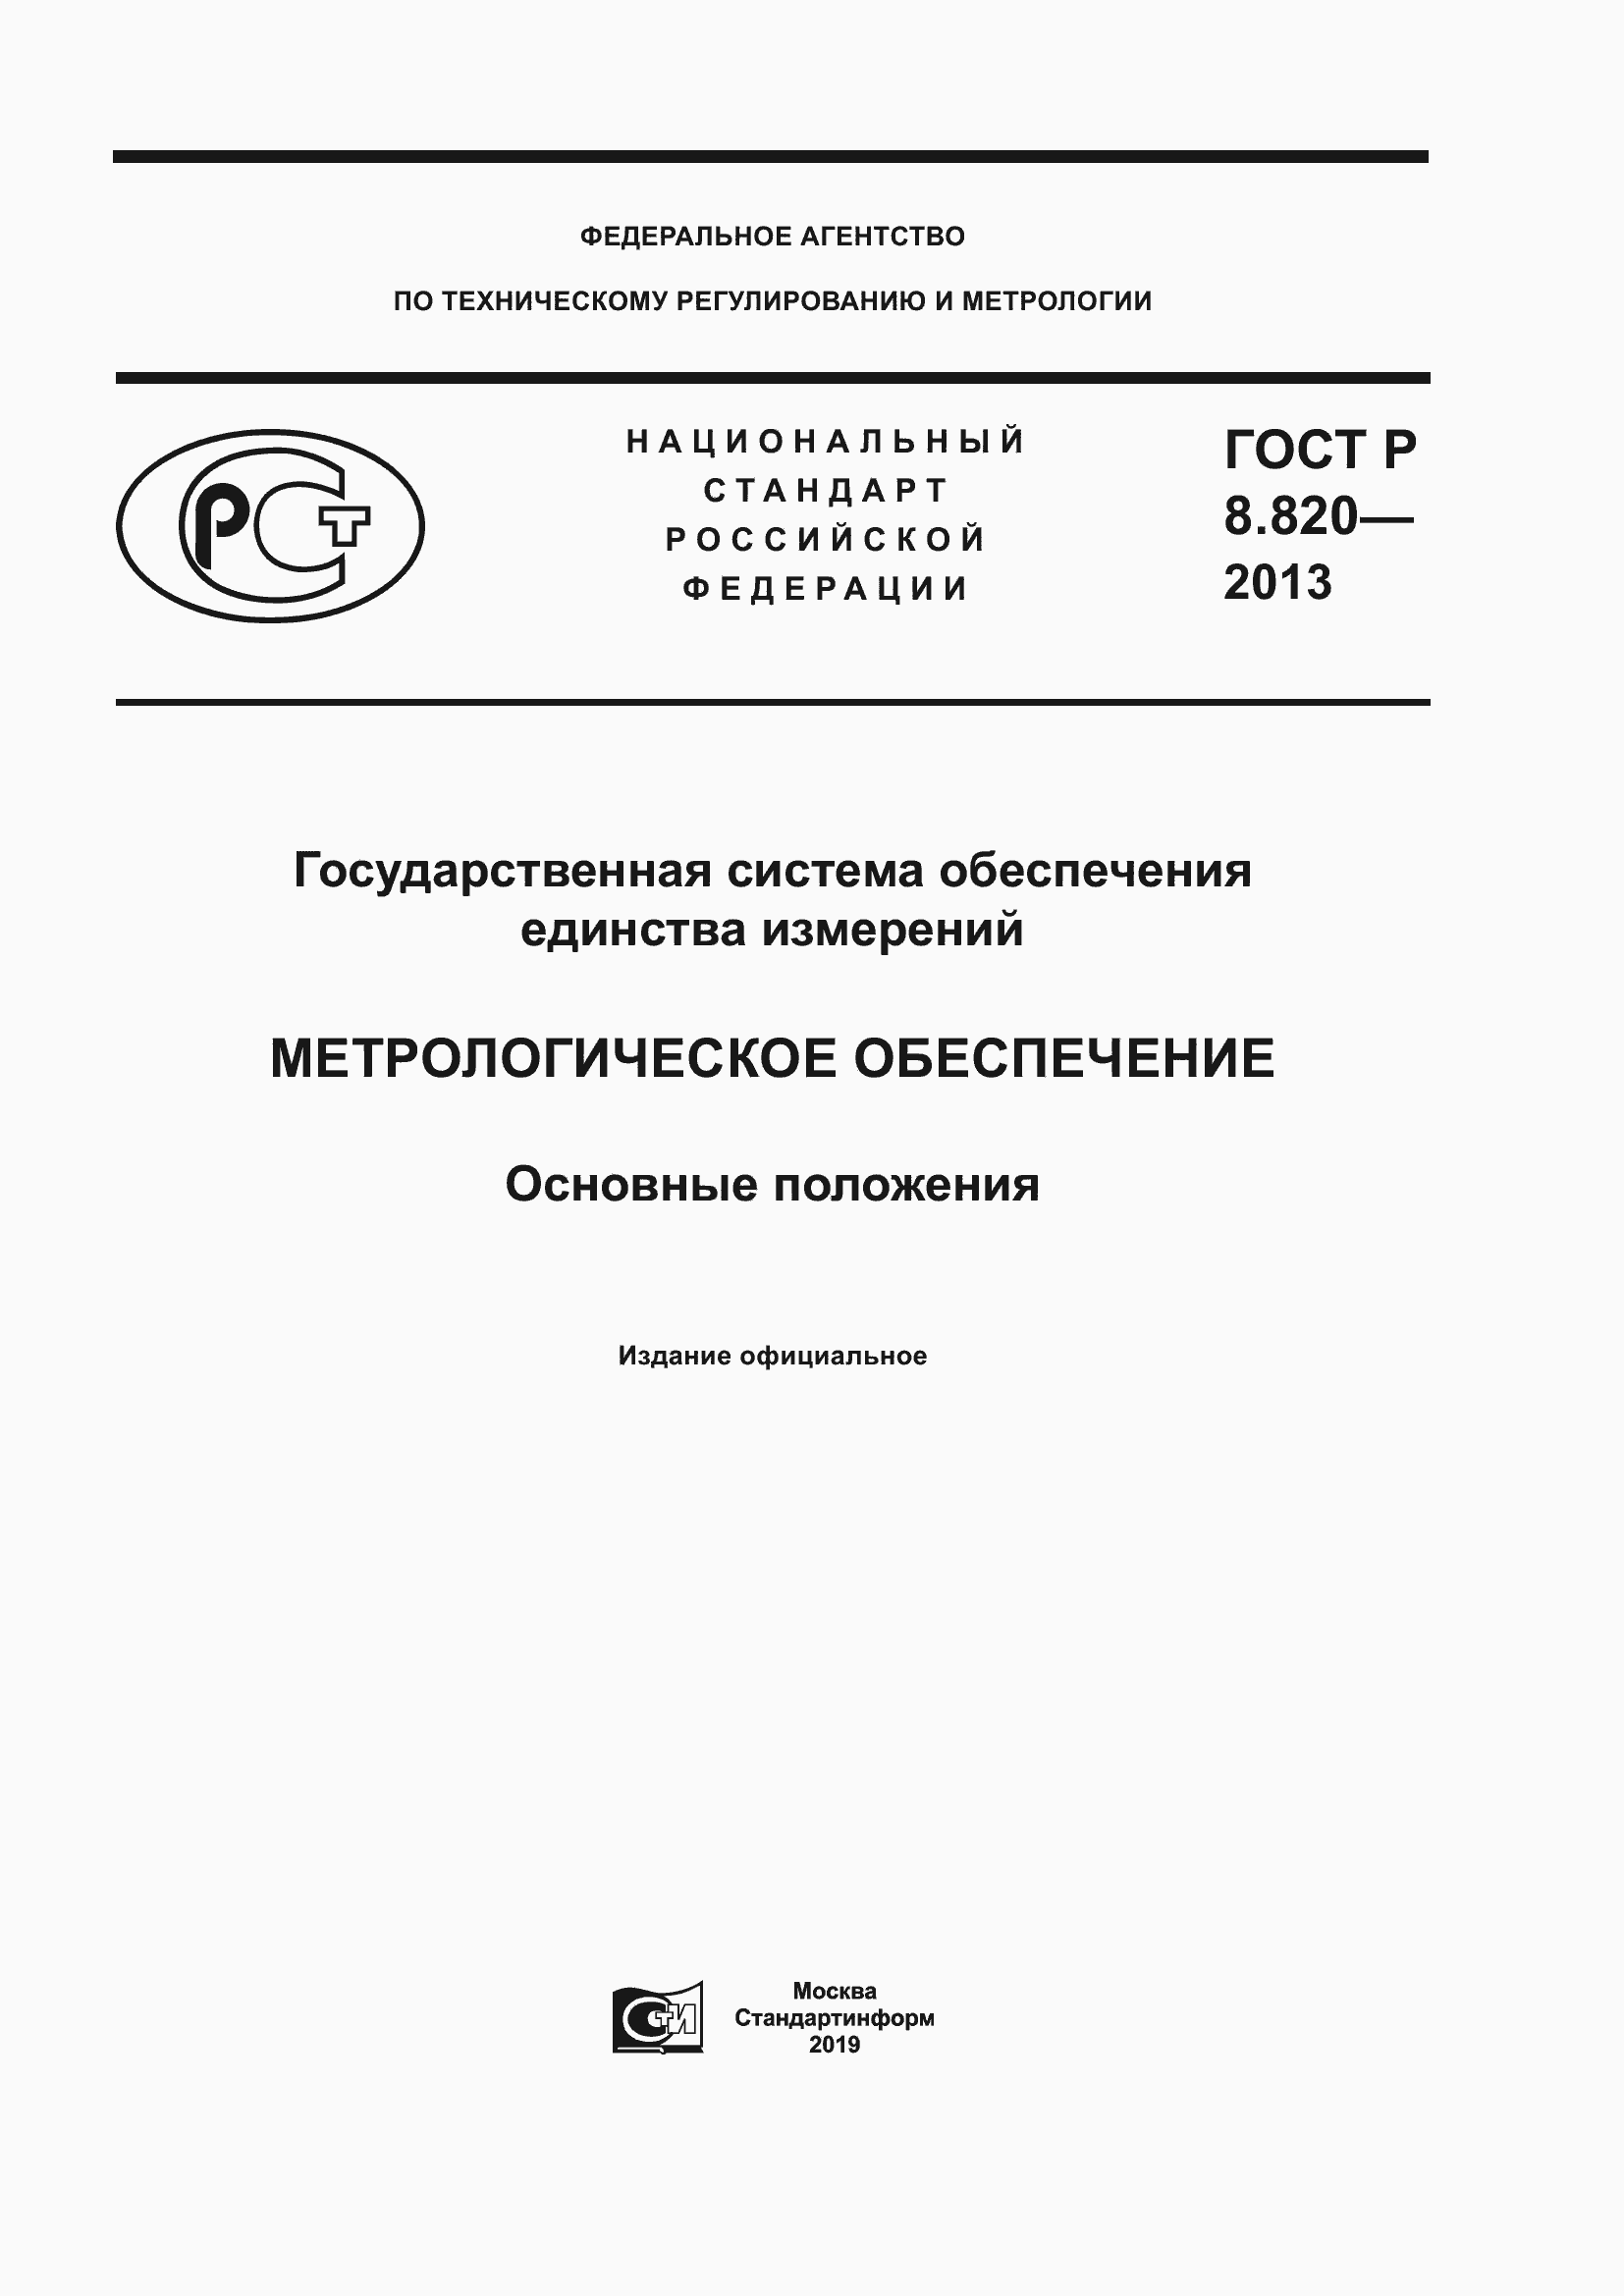 ГОСТ Р 8.820-2013. Страница 1